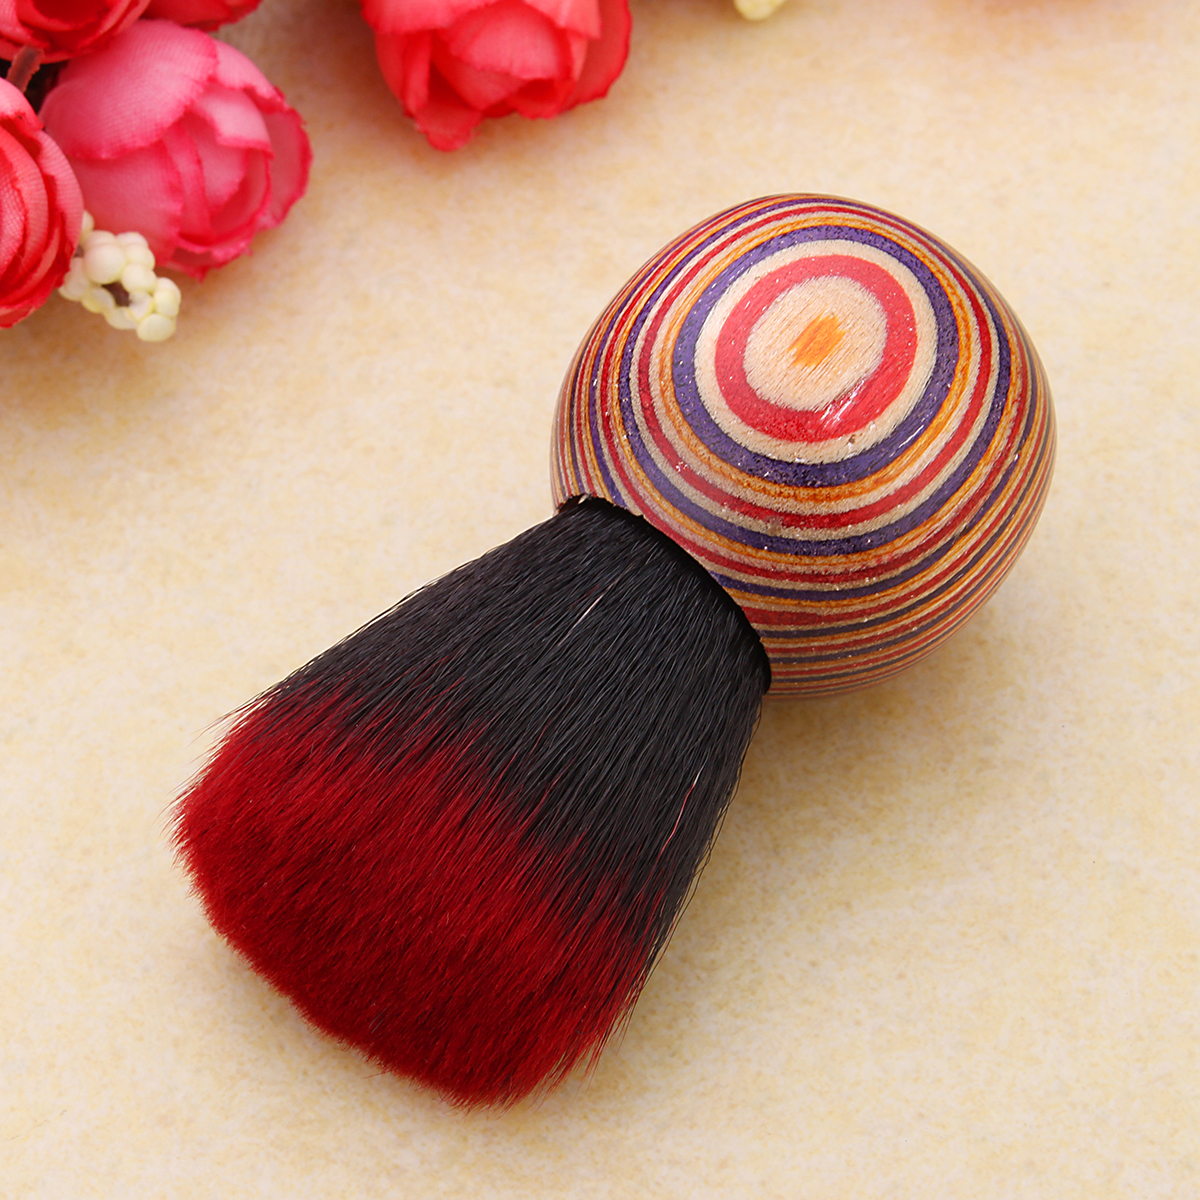 Folk-Style-Wooden-Makeup-Brush-Blush-Loose-Powder-Cosmetic-Tools-1119267